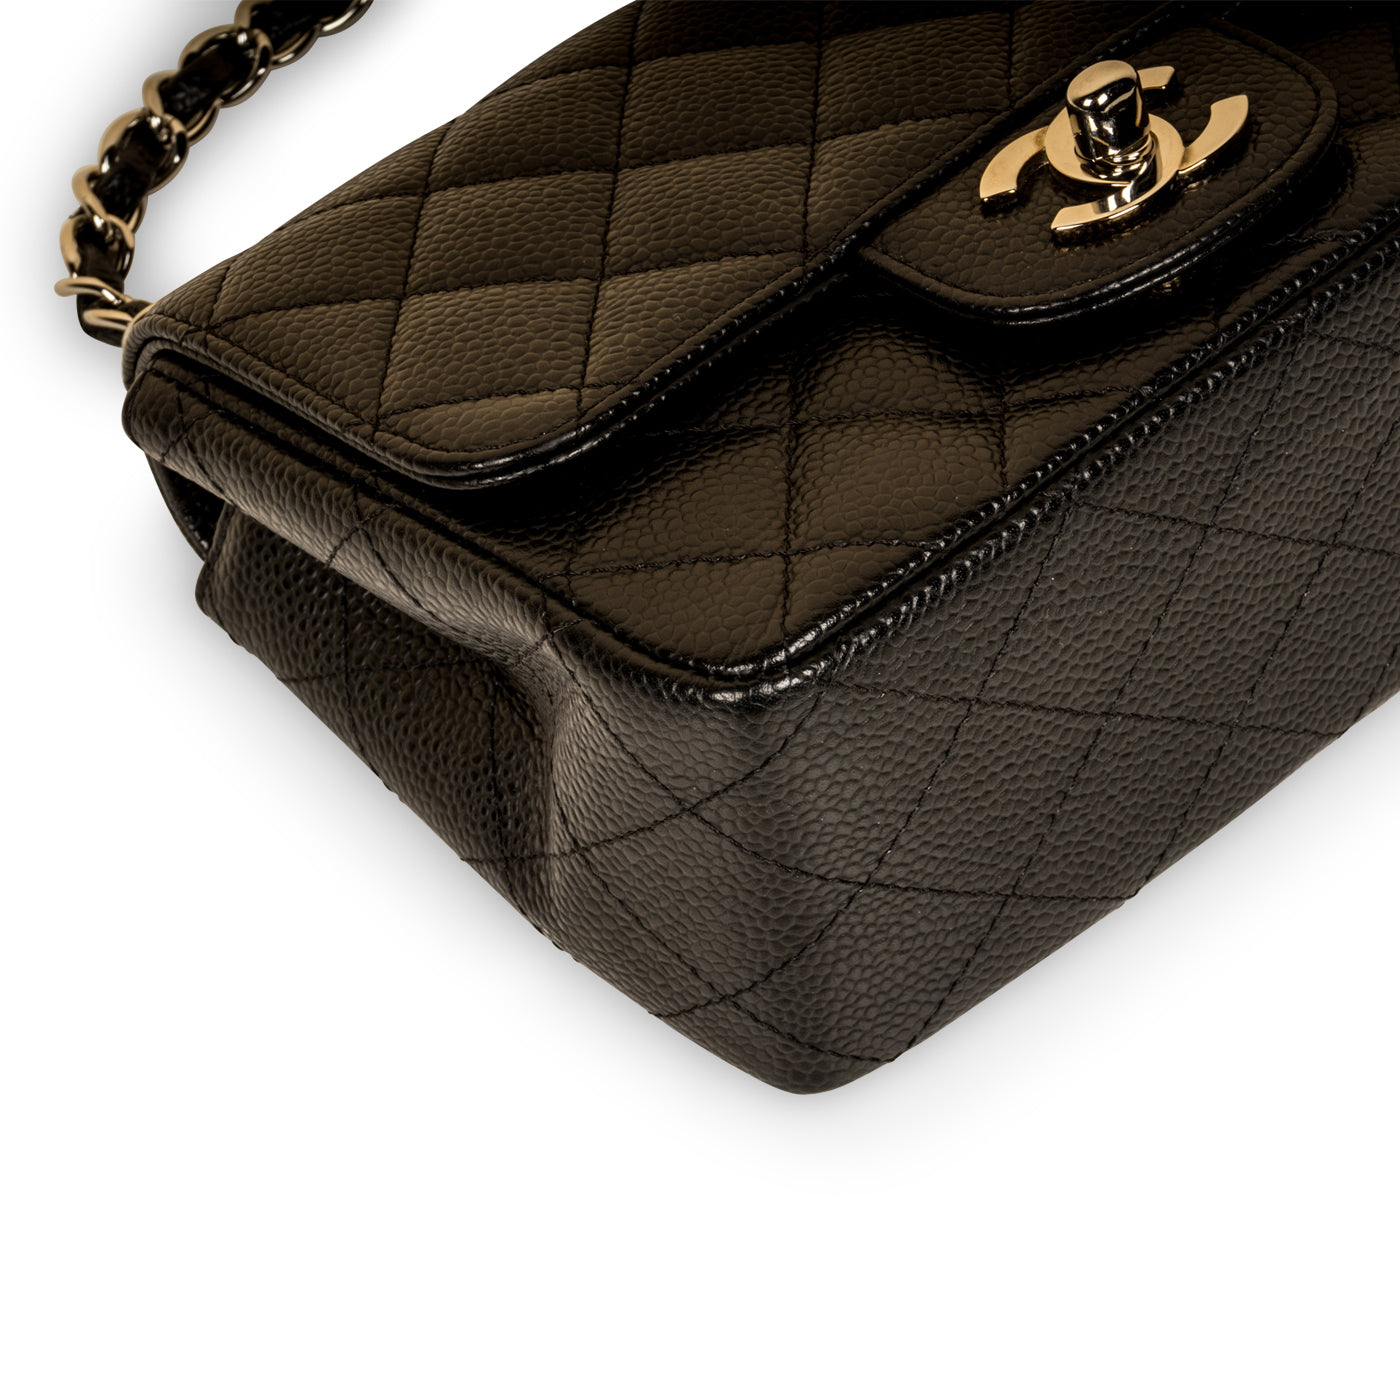 Chanel Black Caviar 3 'CC' Backpack Medium Q6BACJ0FK7021